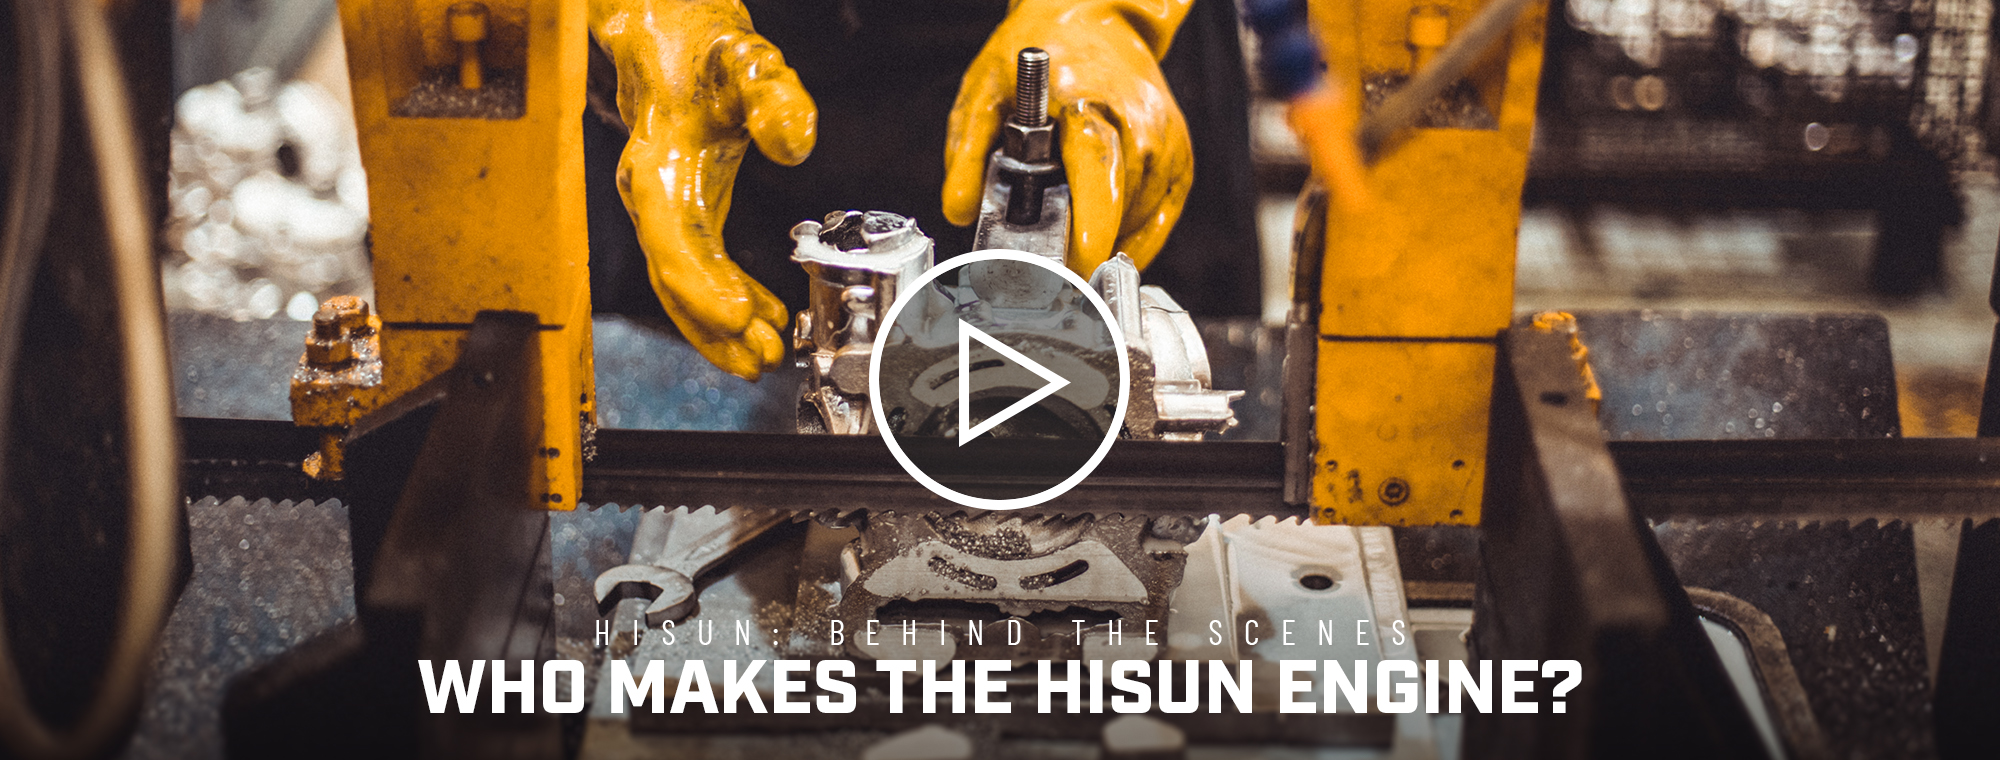 Who Makes the HISUN Engine?